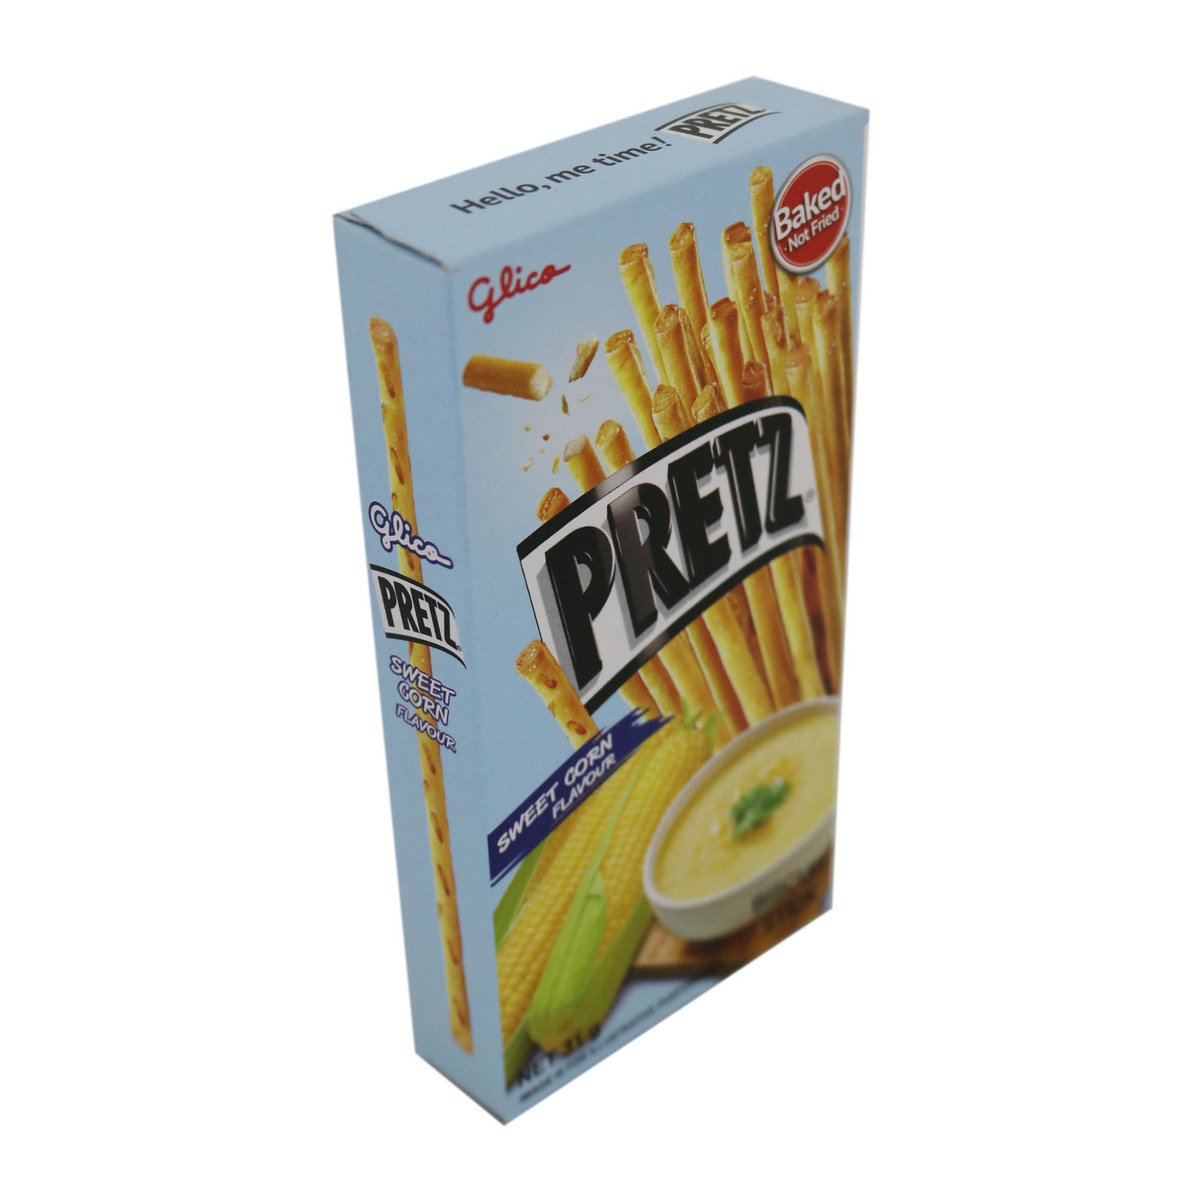 Pretz Sweet Corn Biscuits 31g